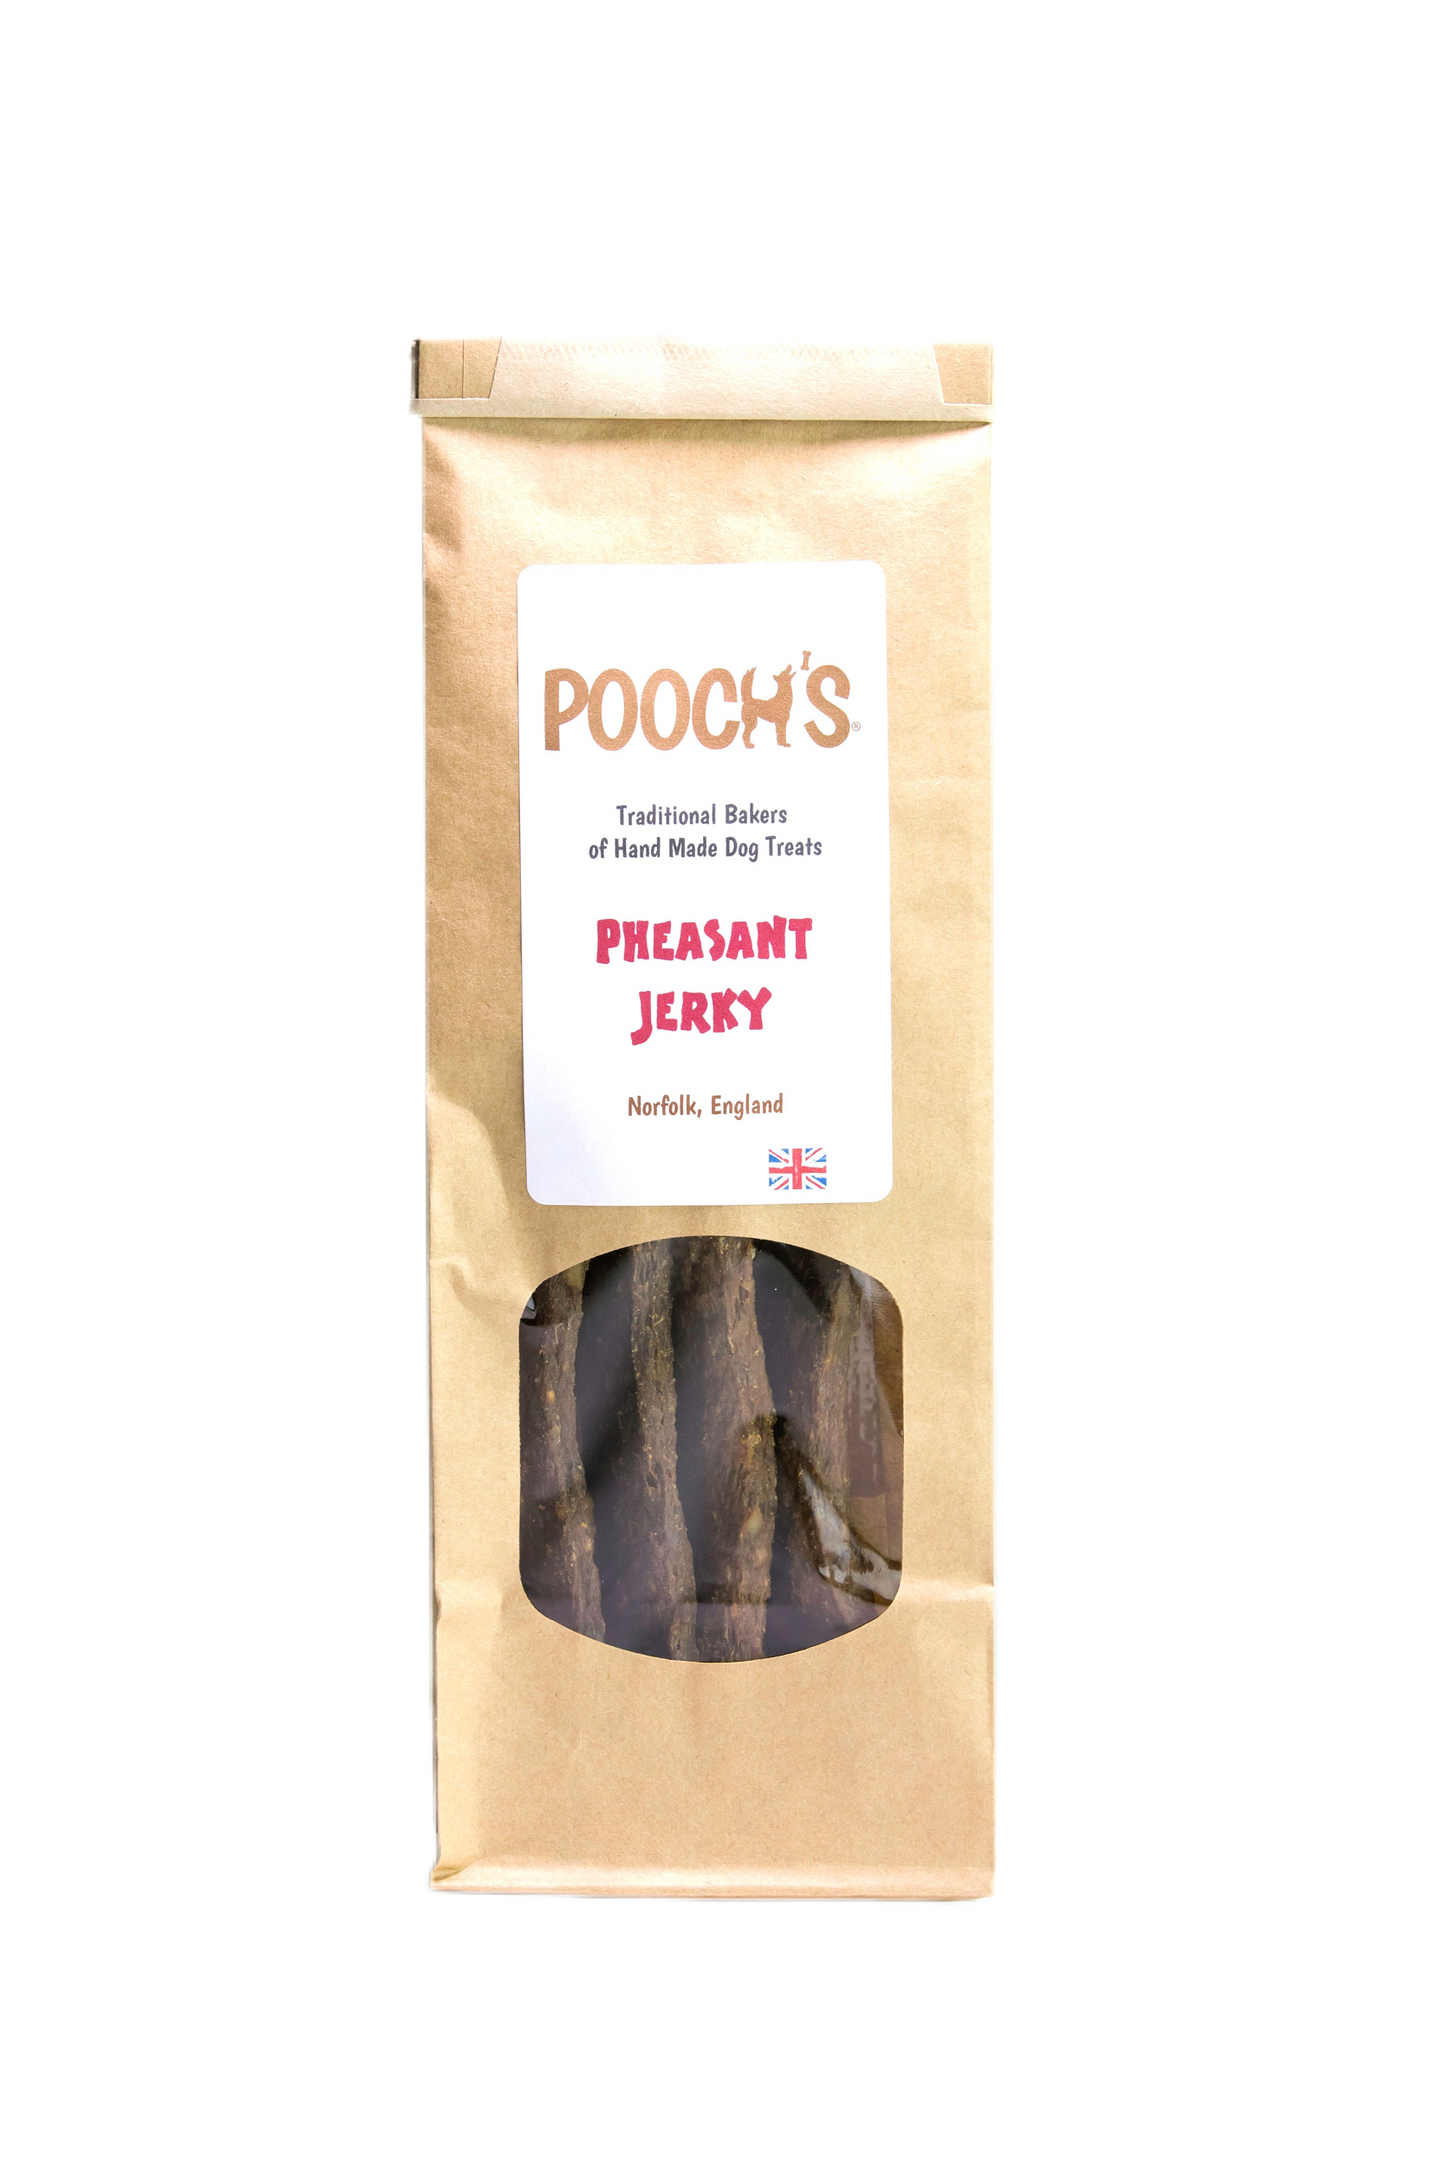 Pooch's Pheasant Jerky